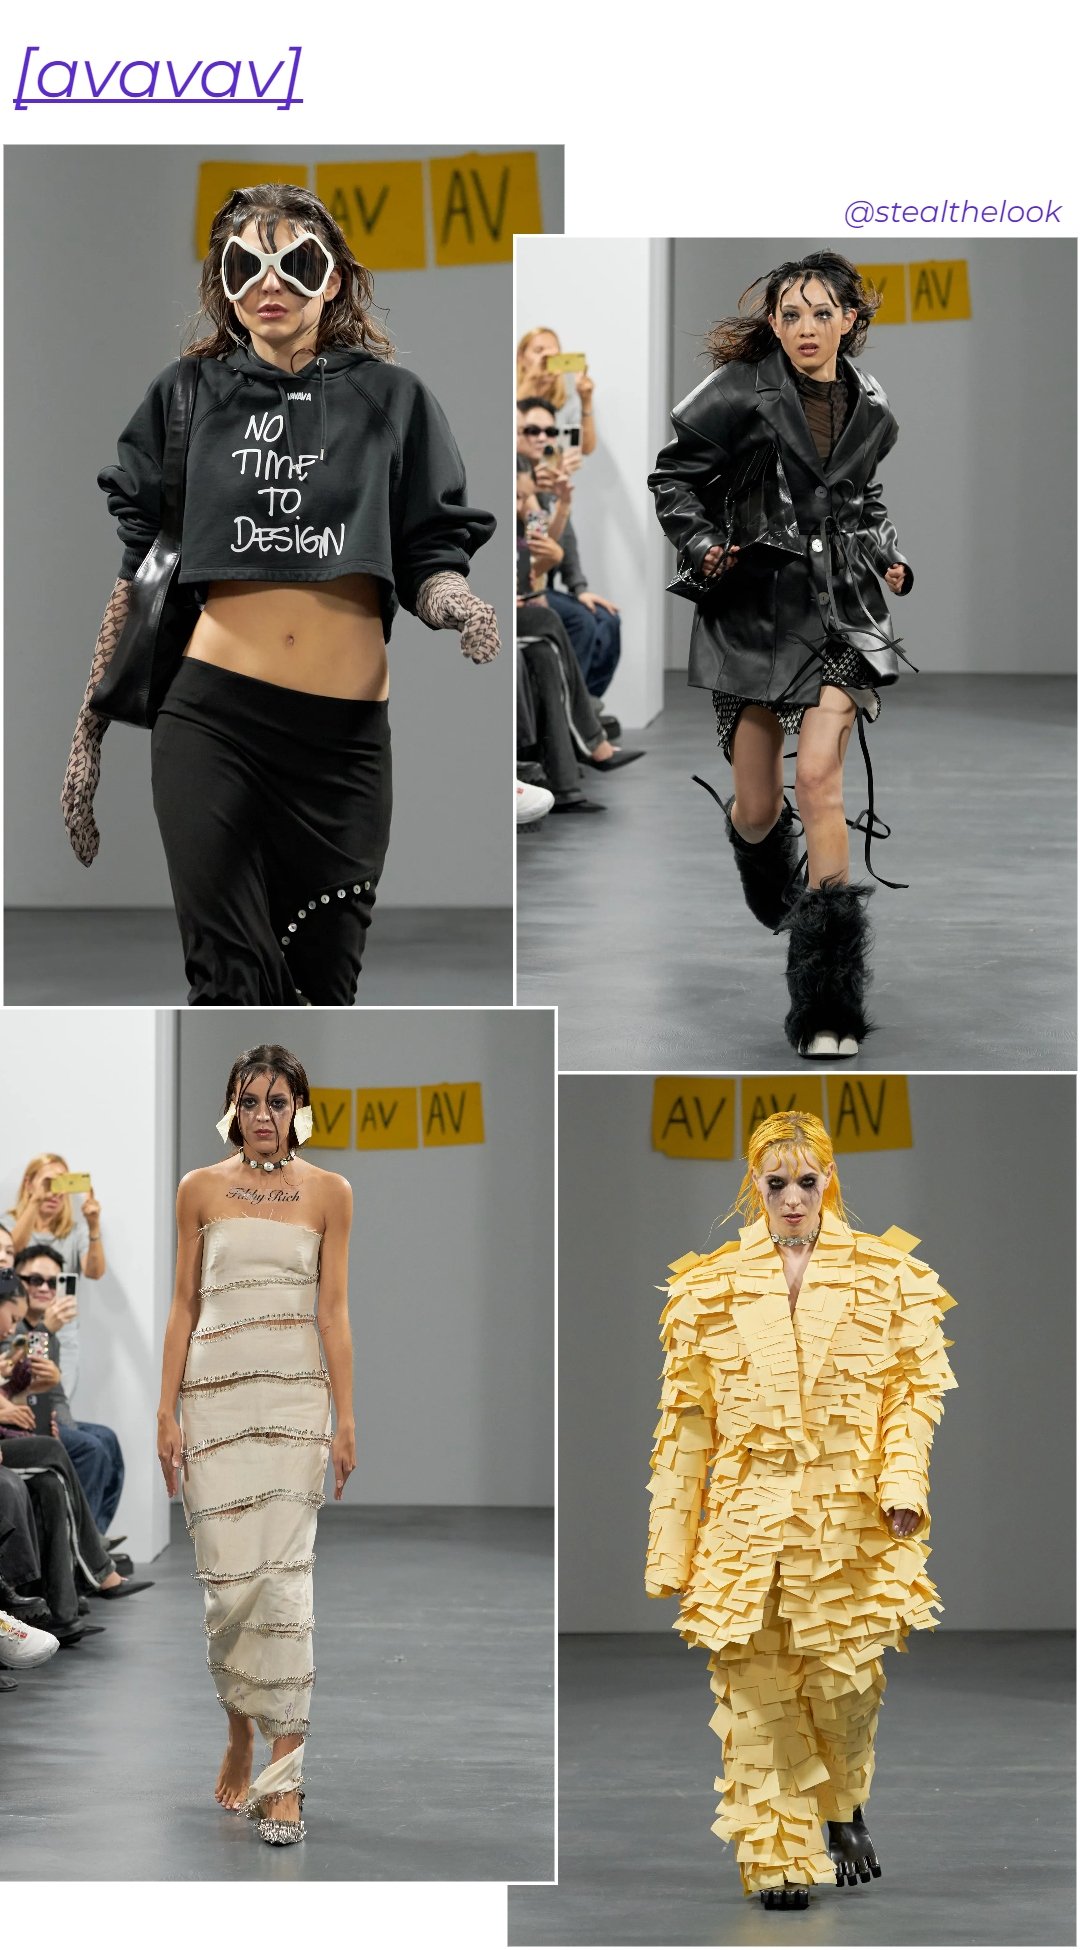 Avavav - roupas diversas - Milano Fashion Week - primavera - colagem de imagens - https://stealthelook.com.br